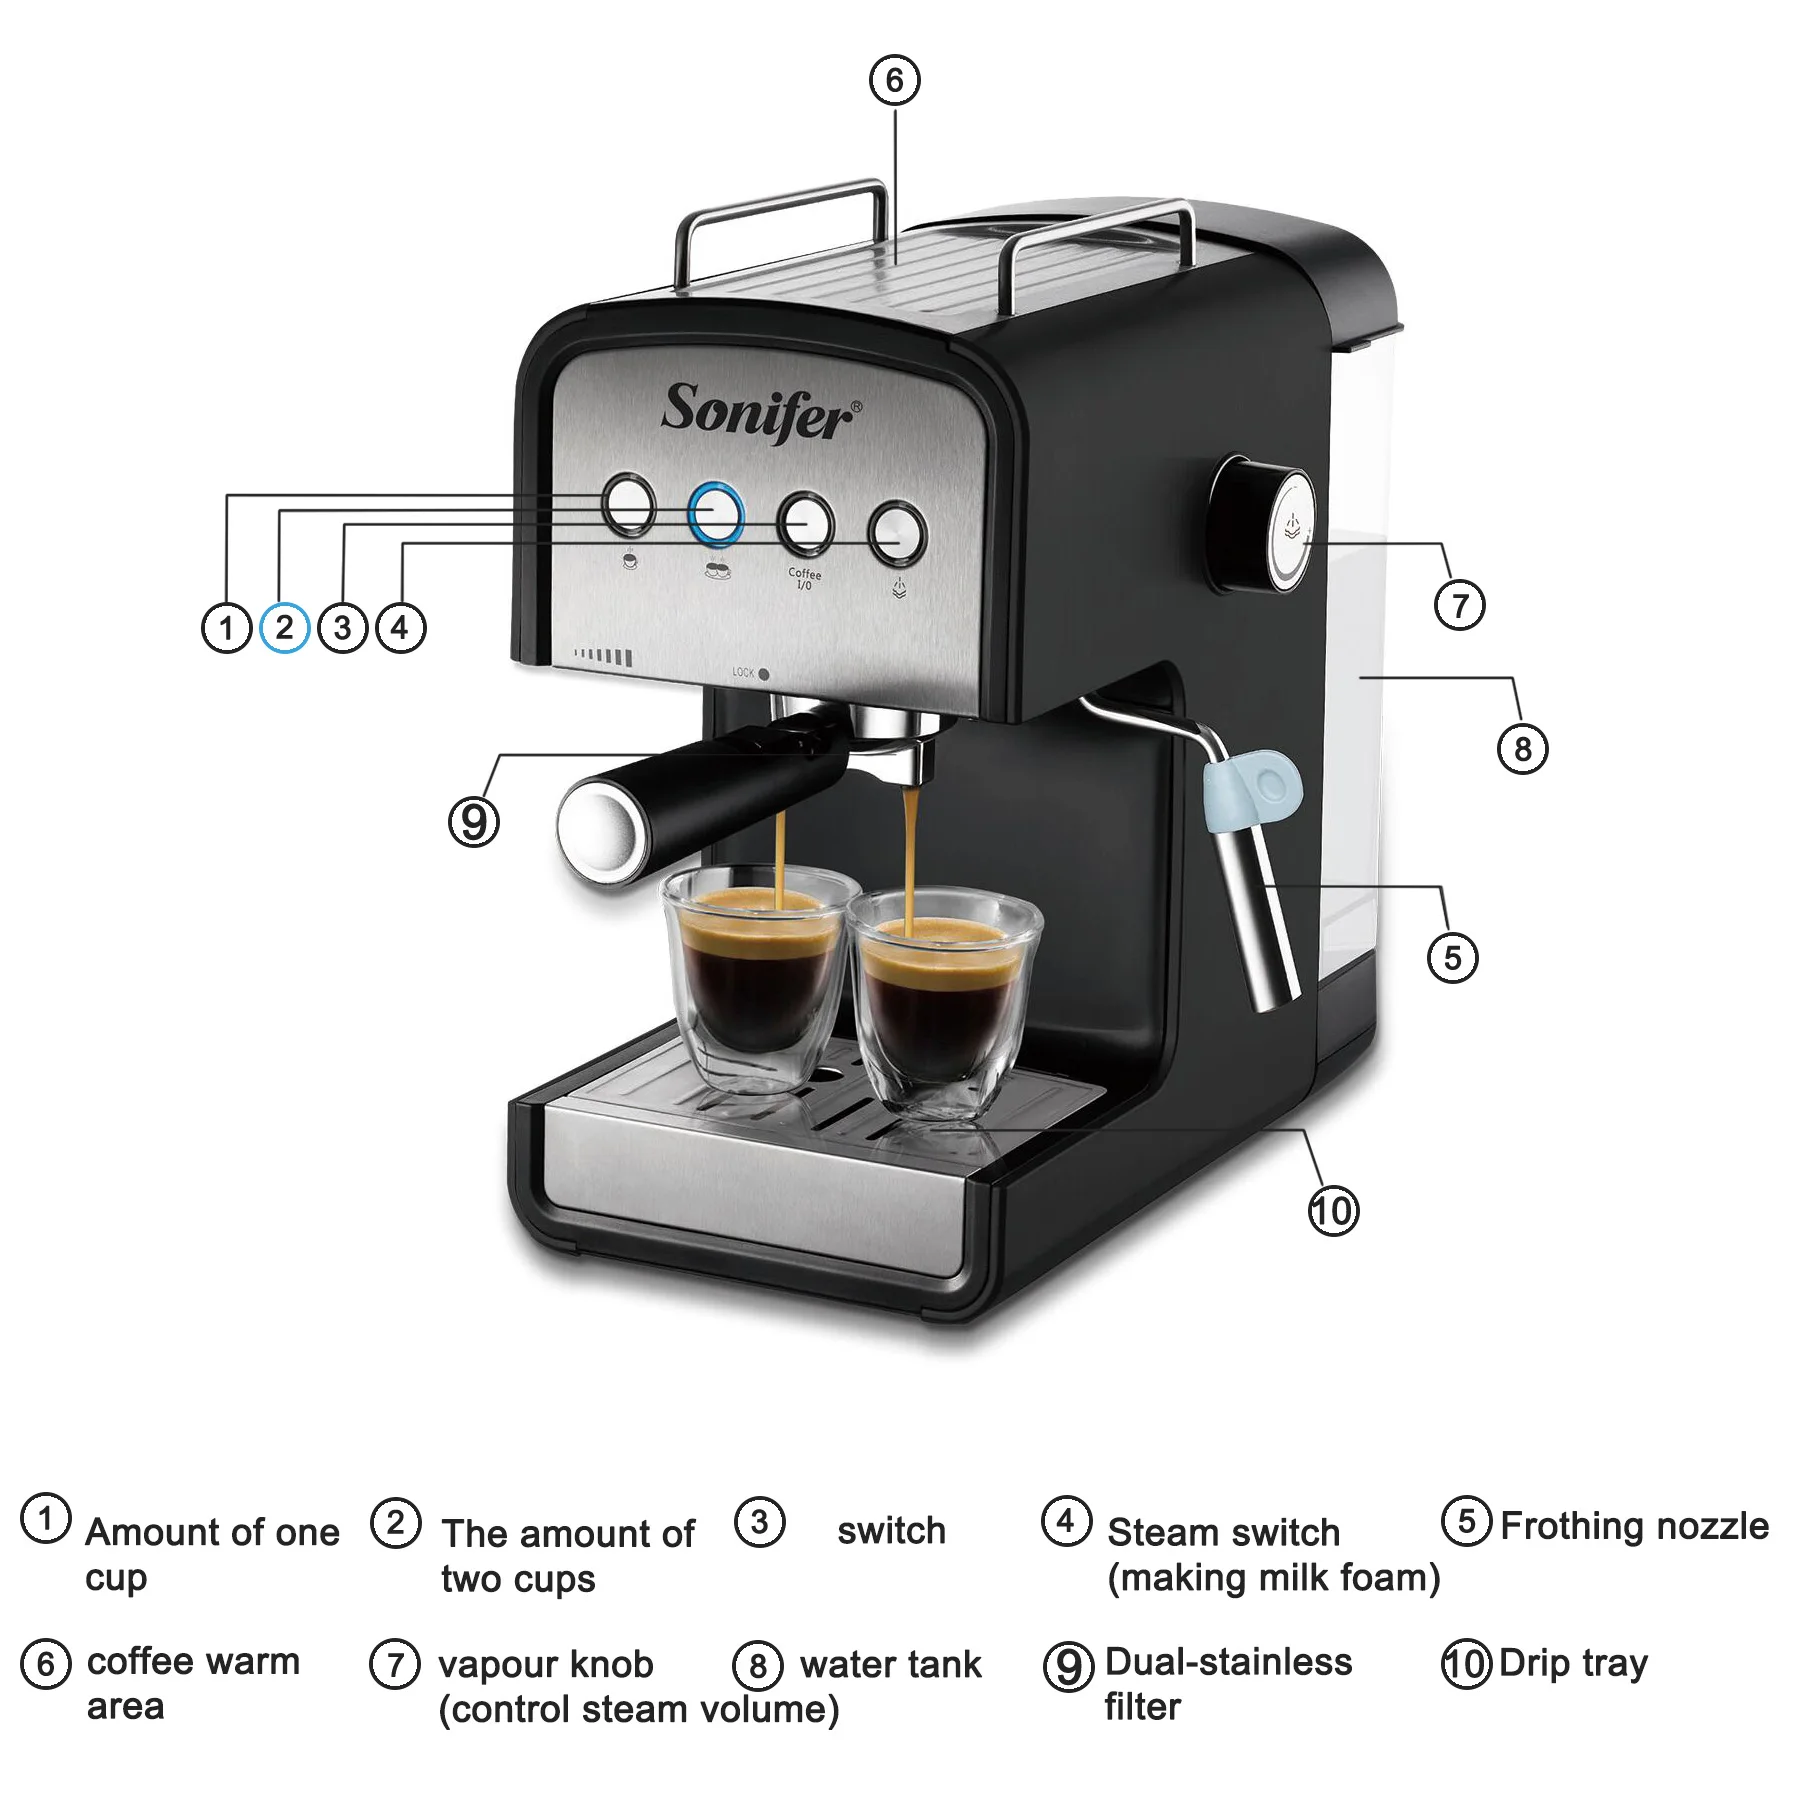 Sonifer تصميم جديد ماكينة القهوة اسبريسو 1 2 لتر ماكينة صنع قهوة اسبريسو للكابتشينو Sf 3529 Buy ماكينة صنع القهوة ماكينة صنع قهوة اسبريسو ماكينة صنع القهوة الكهربائية Product On Alibaba Com